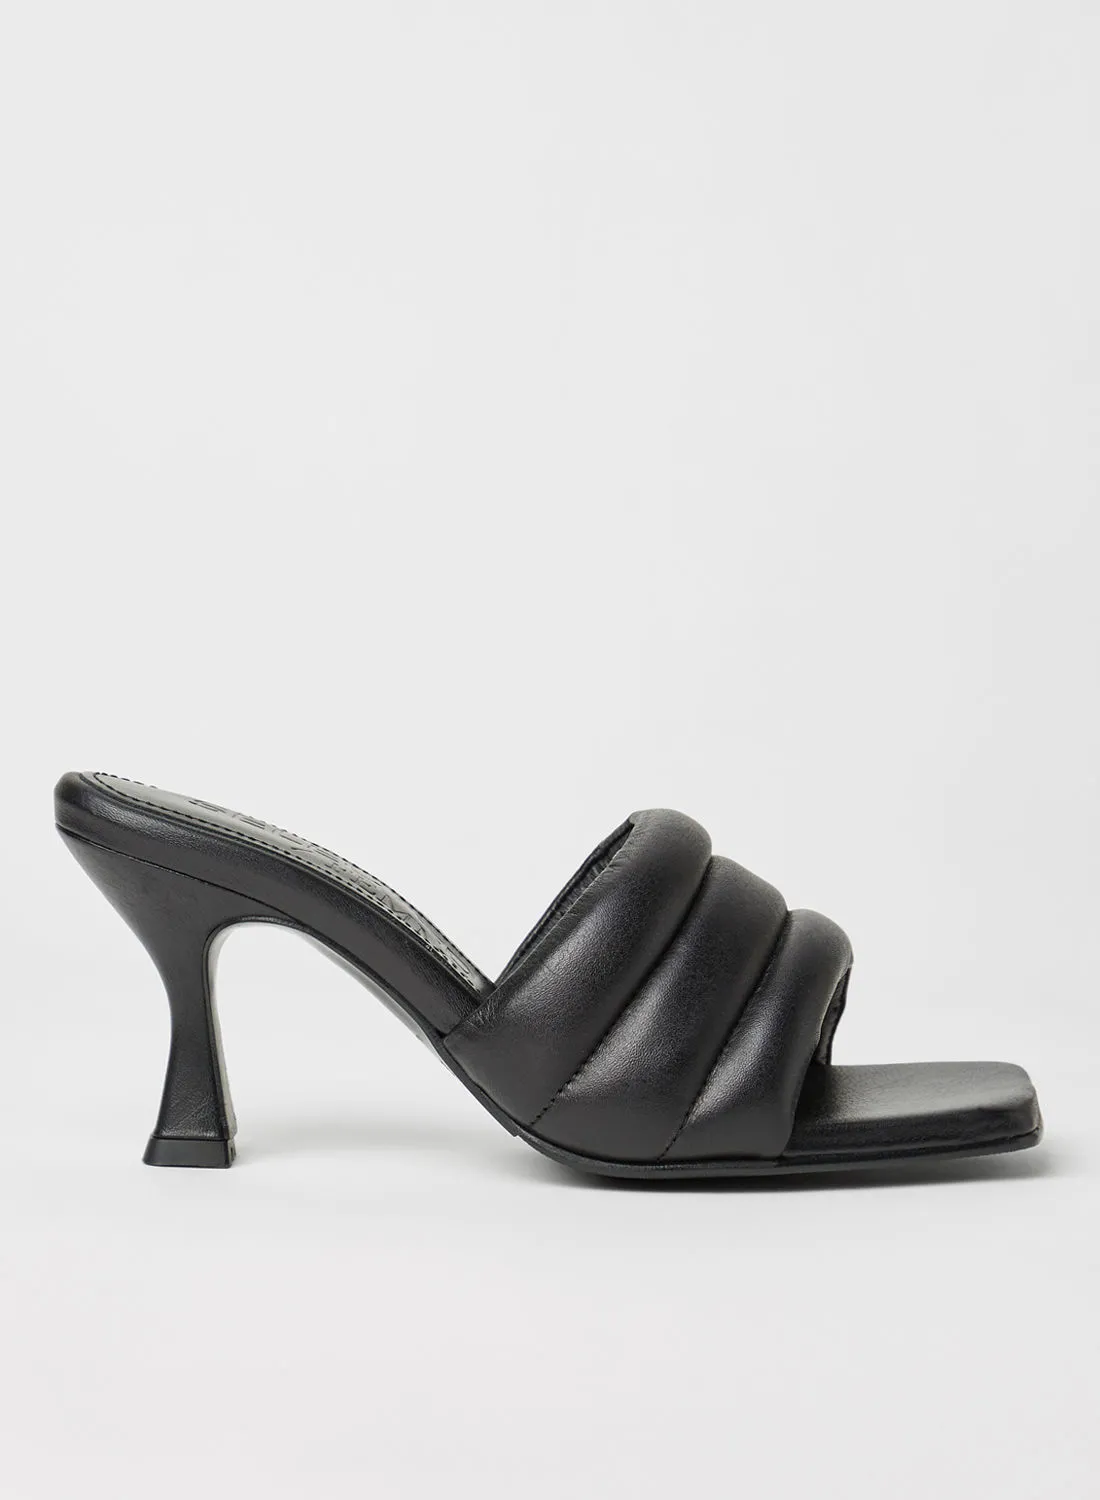 SELECTED FEMME حذاء كعب عالي مبطّن أسود اللون